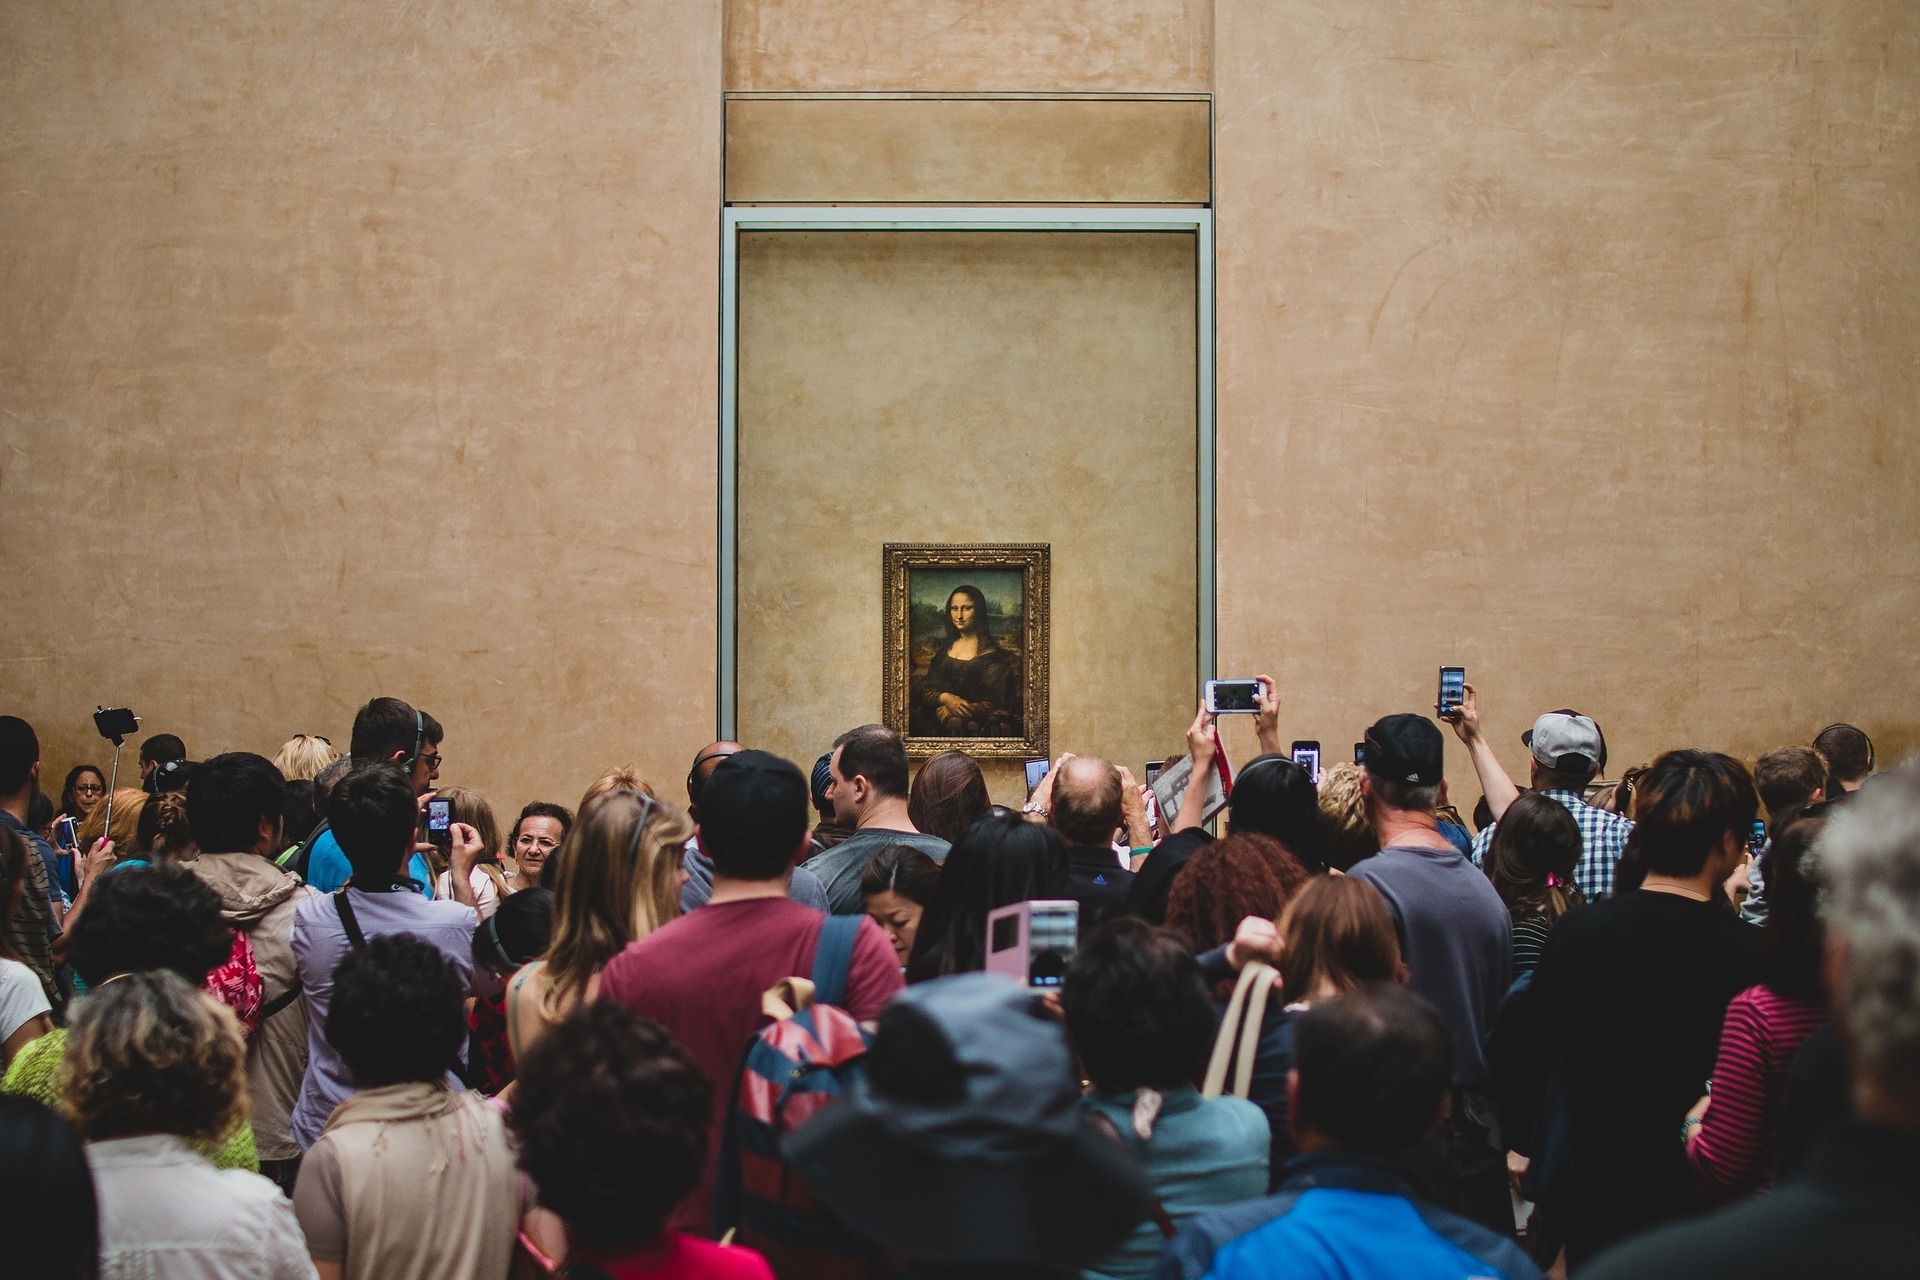 Mona Lisa - La Joconde